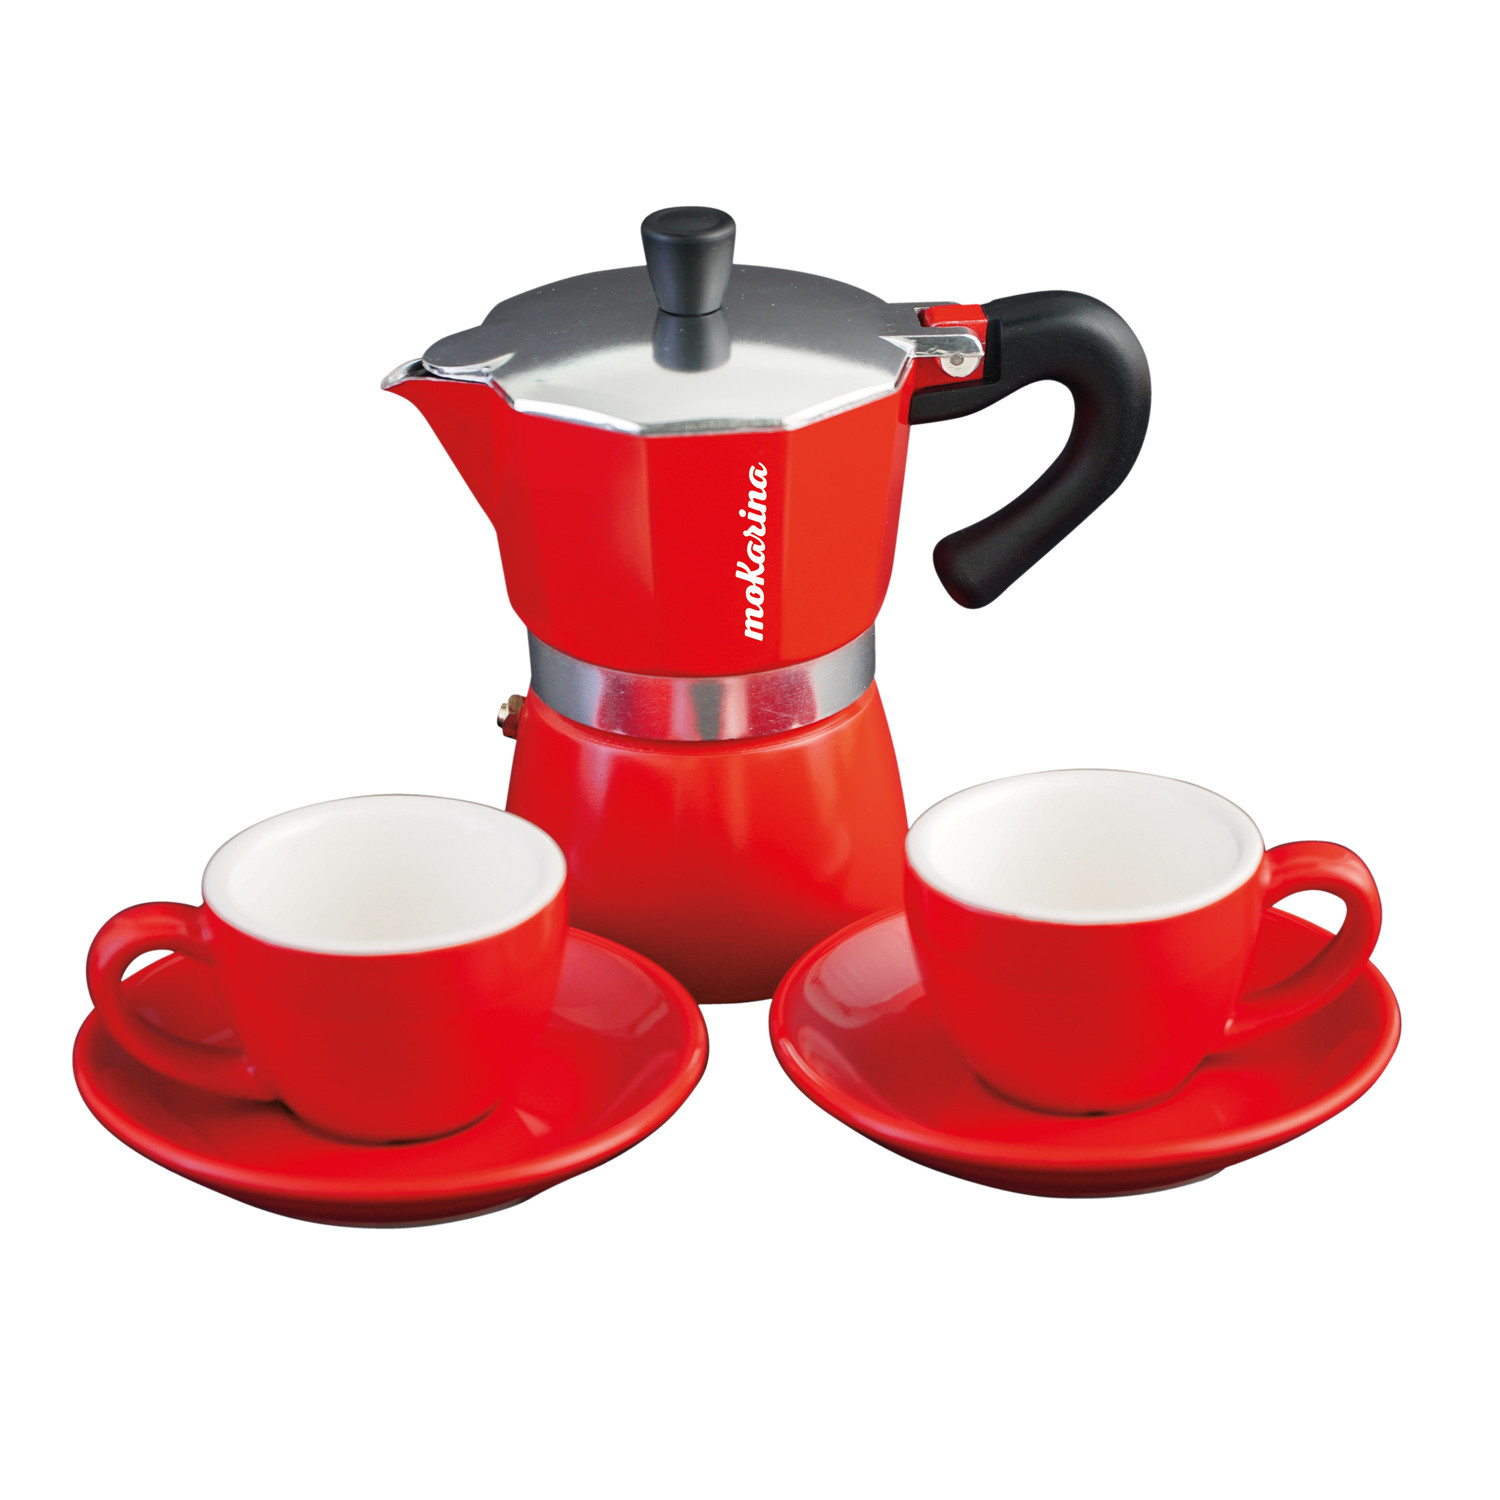 TWEED TW071 caffettiera set moka + 2 tazzine colore rosso, Macchine caffè  in Offerta su Stay On